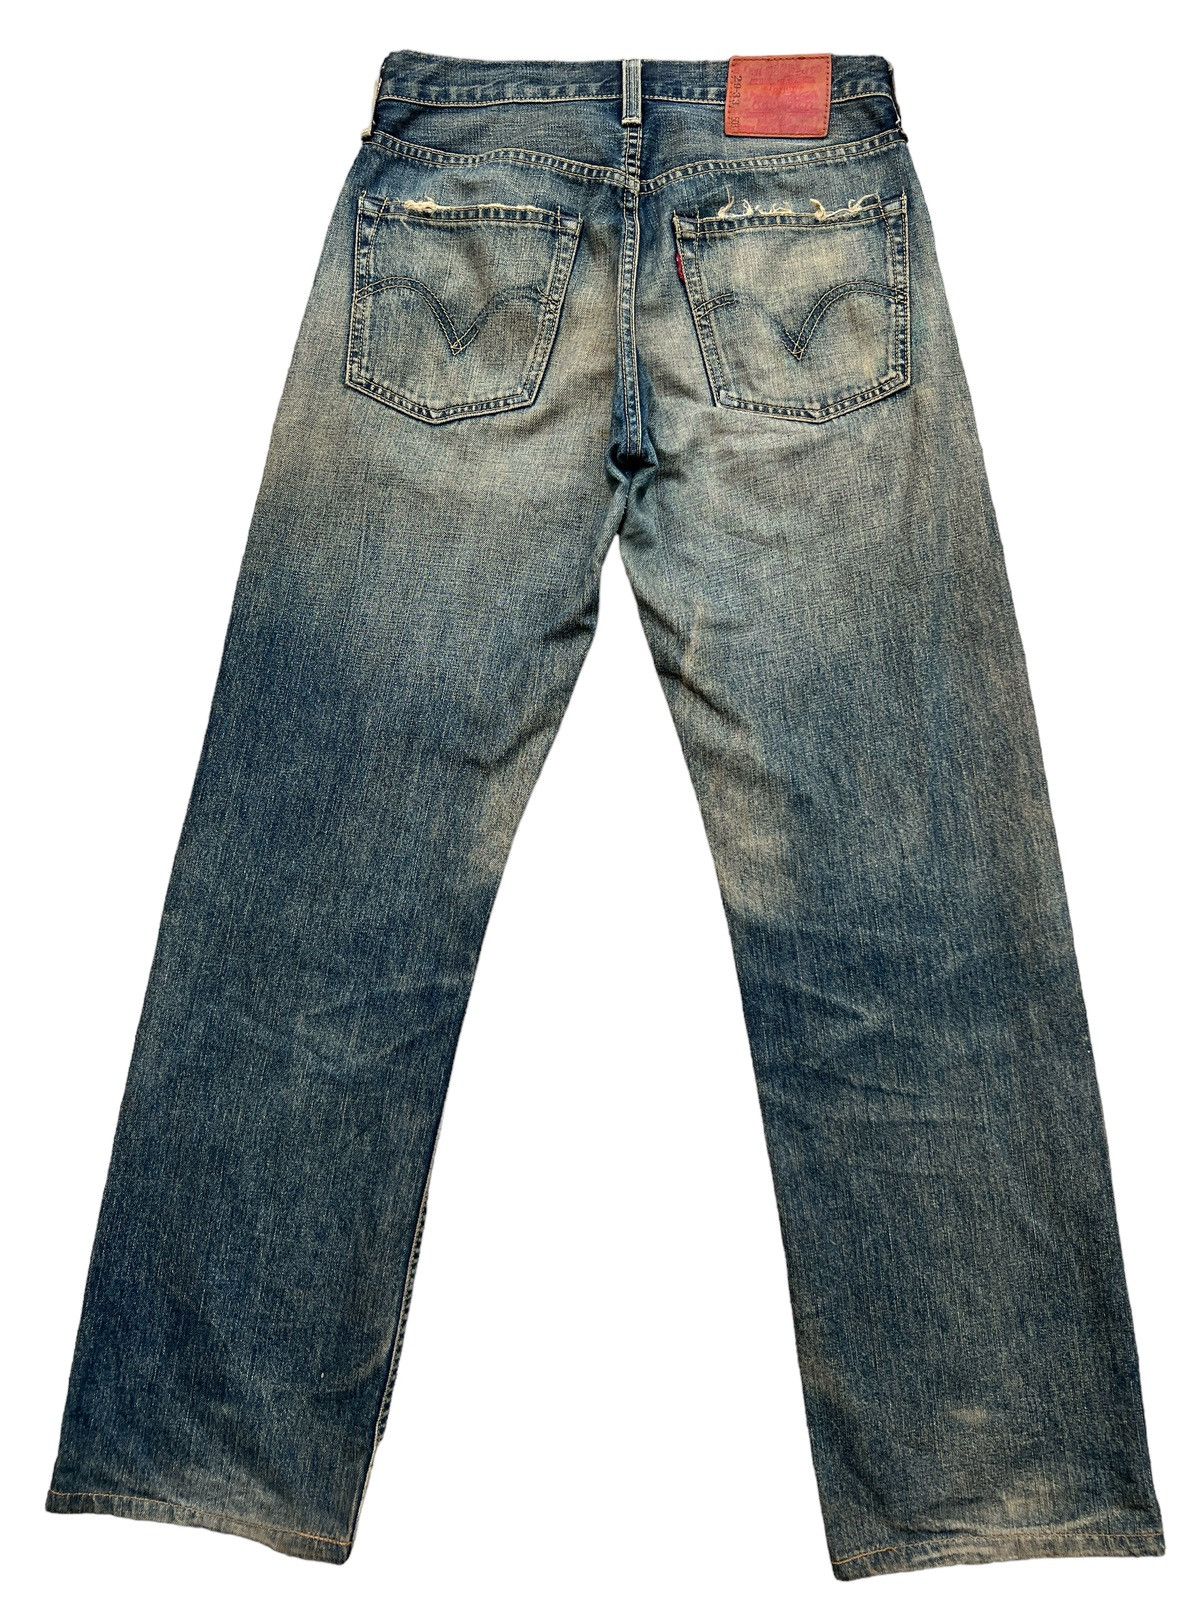 Vintage Levi’s 503 Distressed Rusty Denim Jeans 30x32 - 3